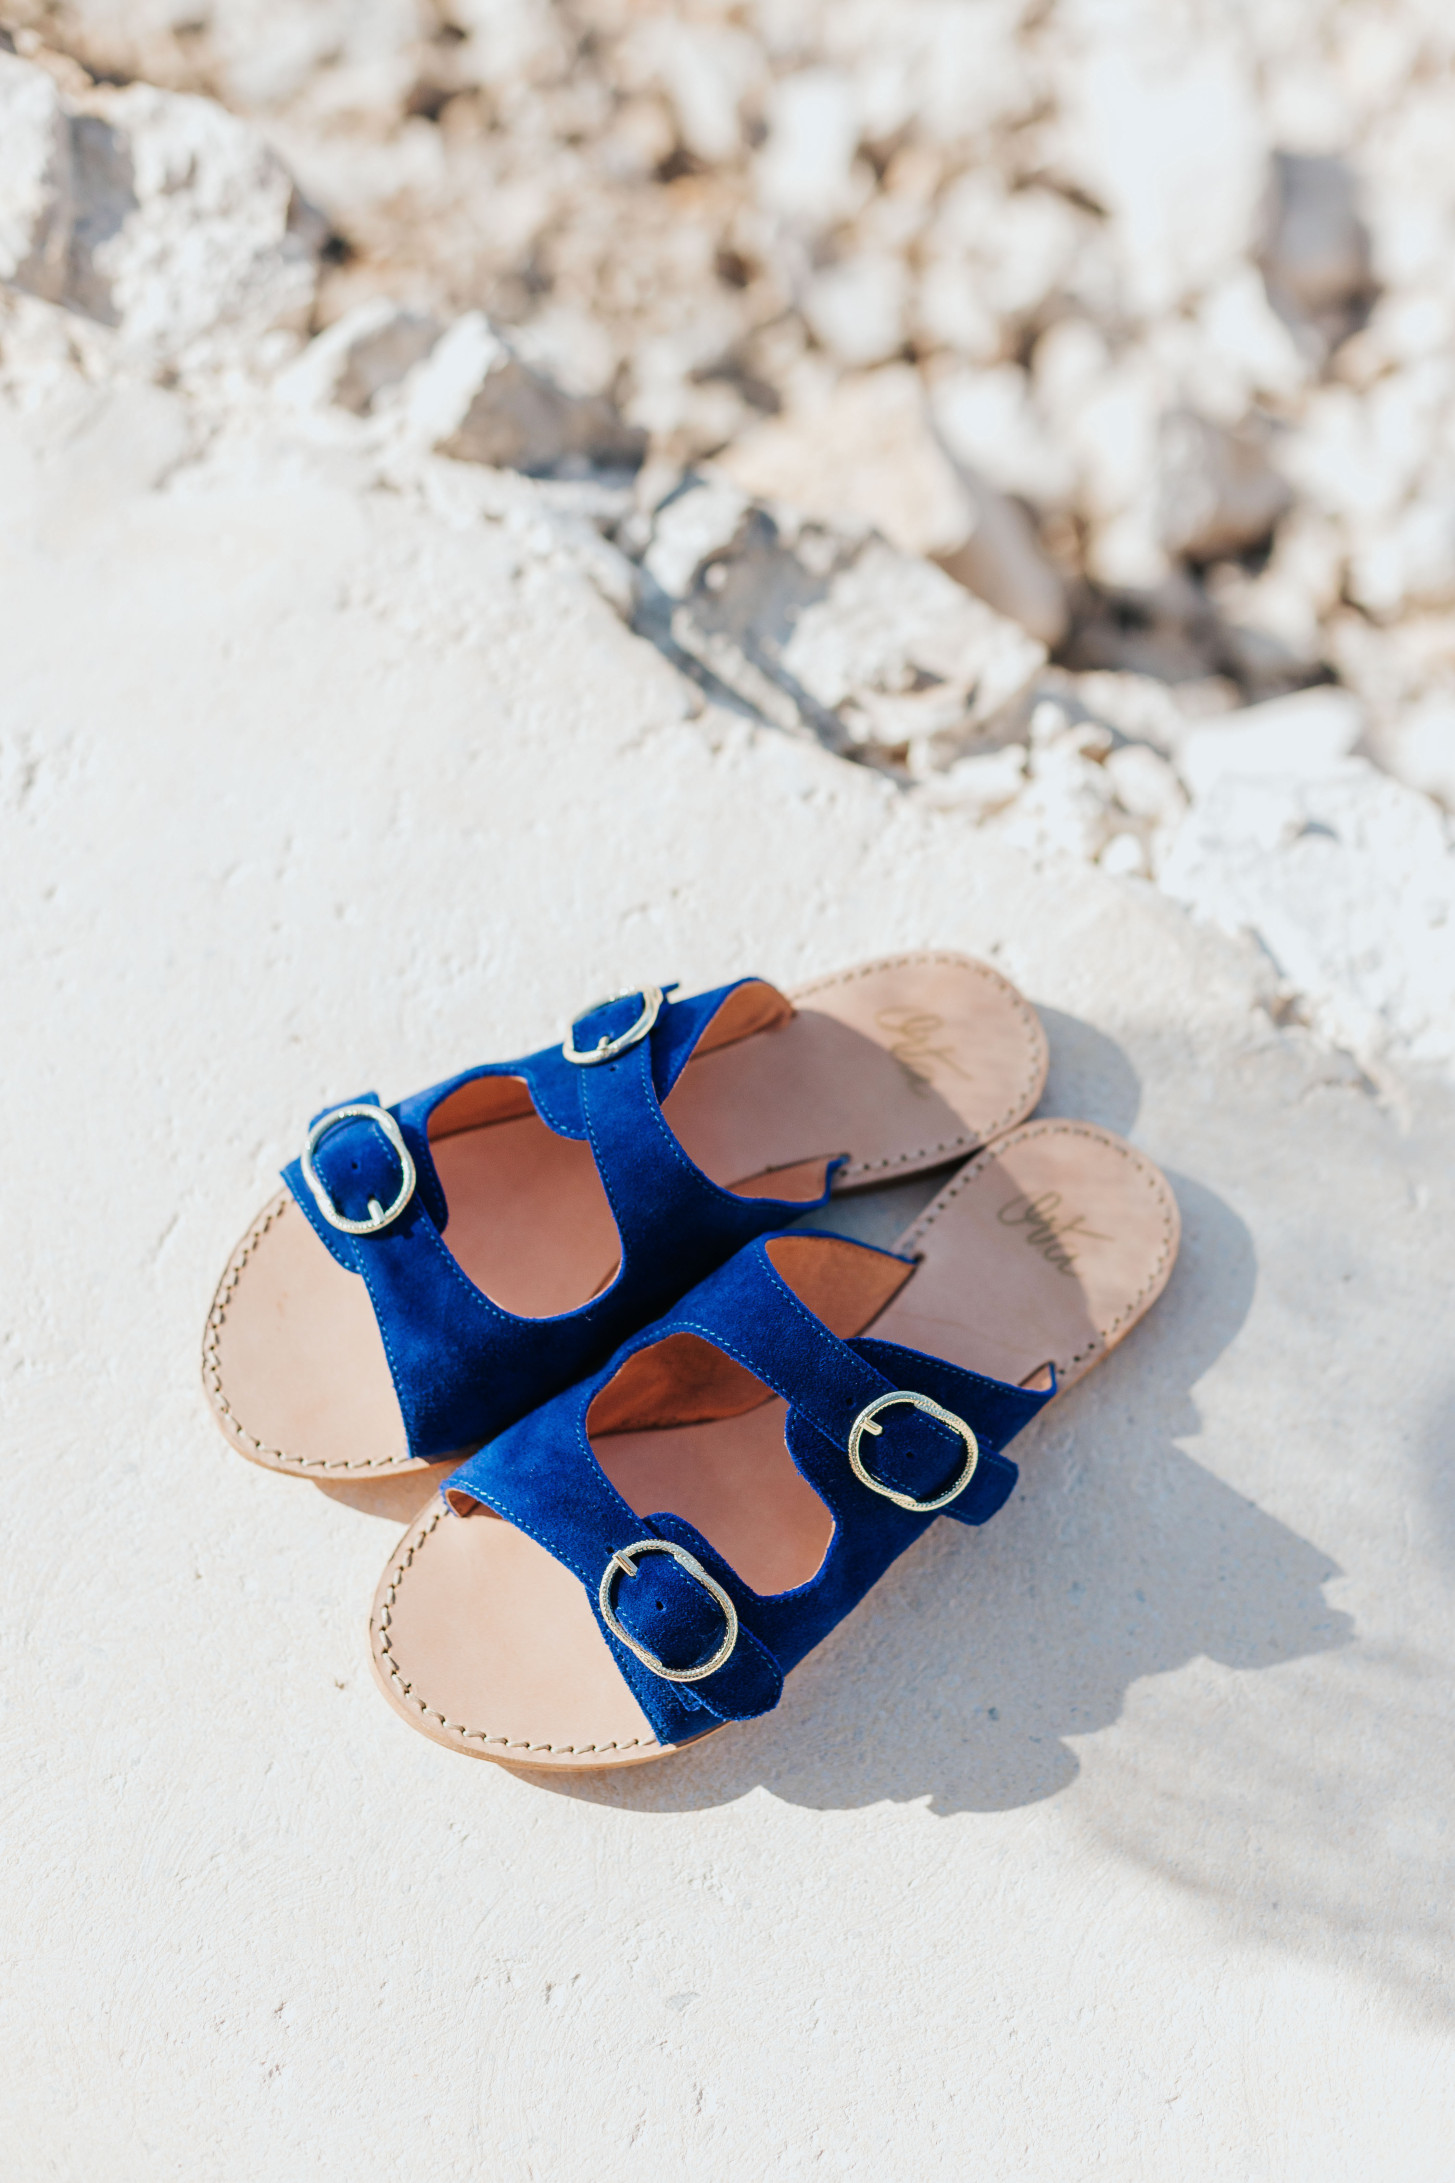 All kinds of Cupboard Appropriate Faro bleu électrique sandals - Orta